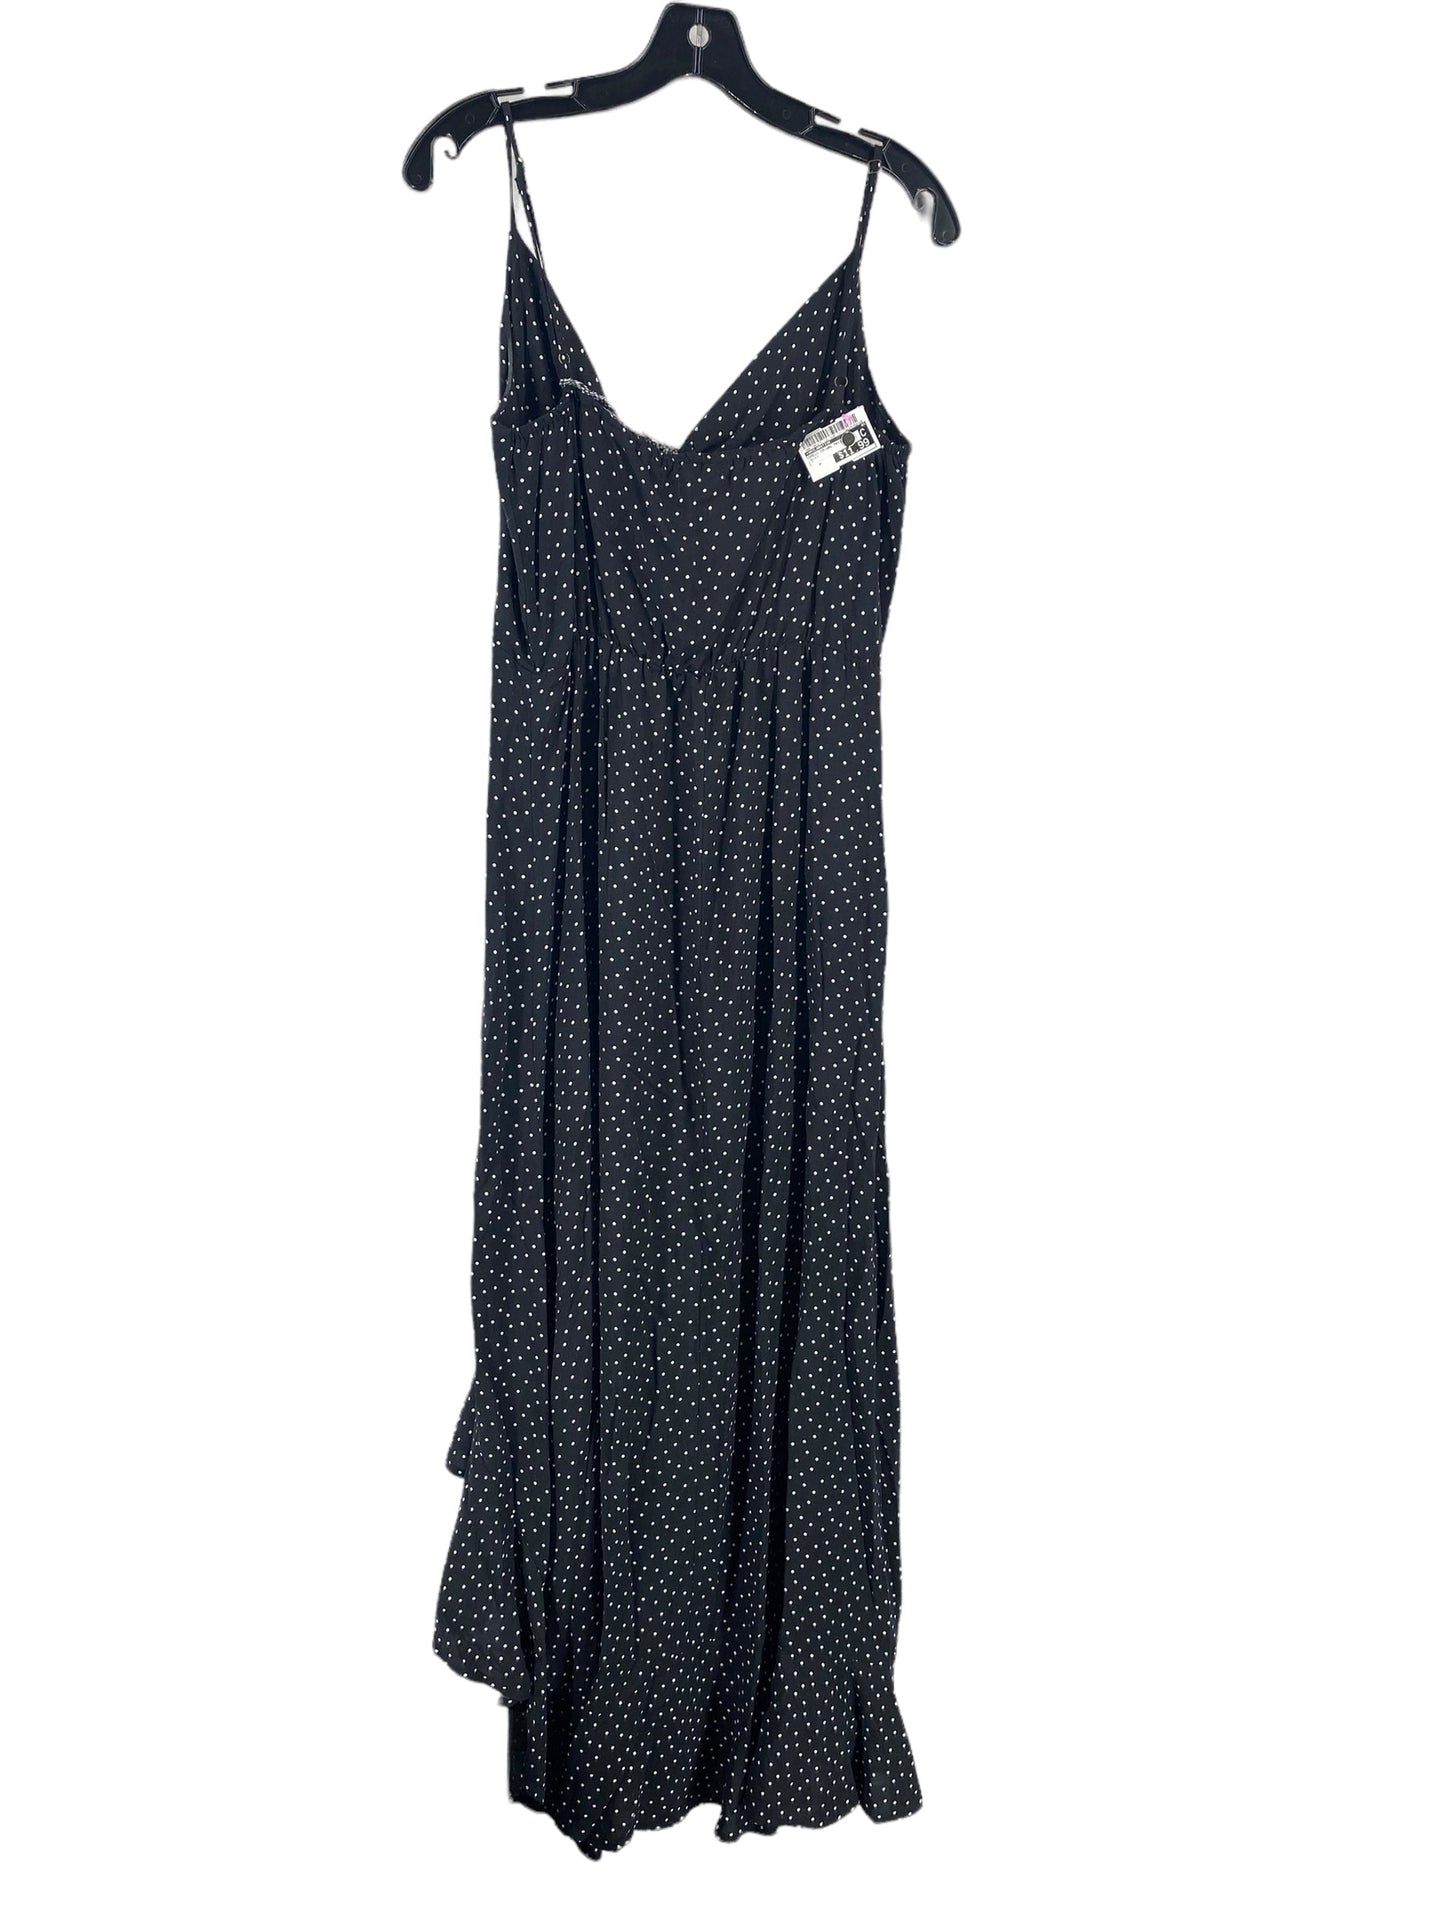 Dress Casual Maxi By Xhilaration  Size: M